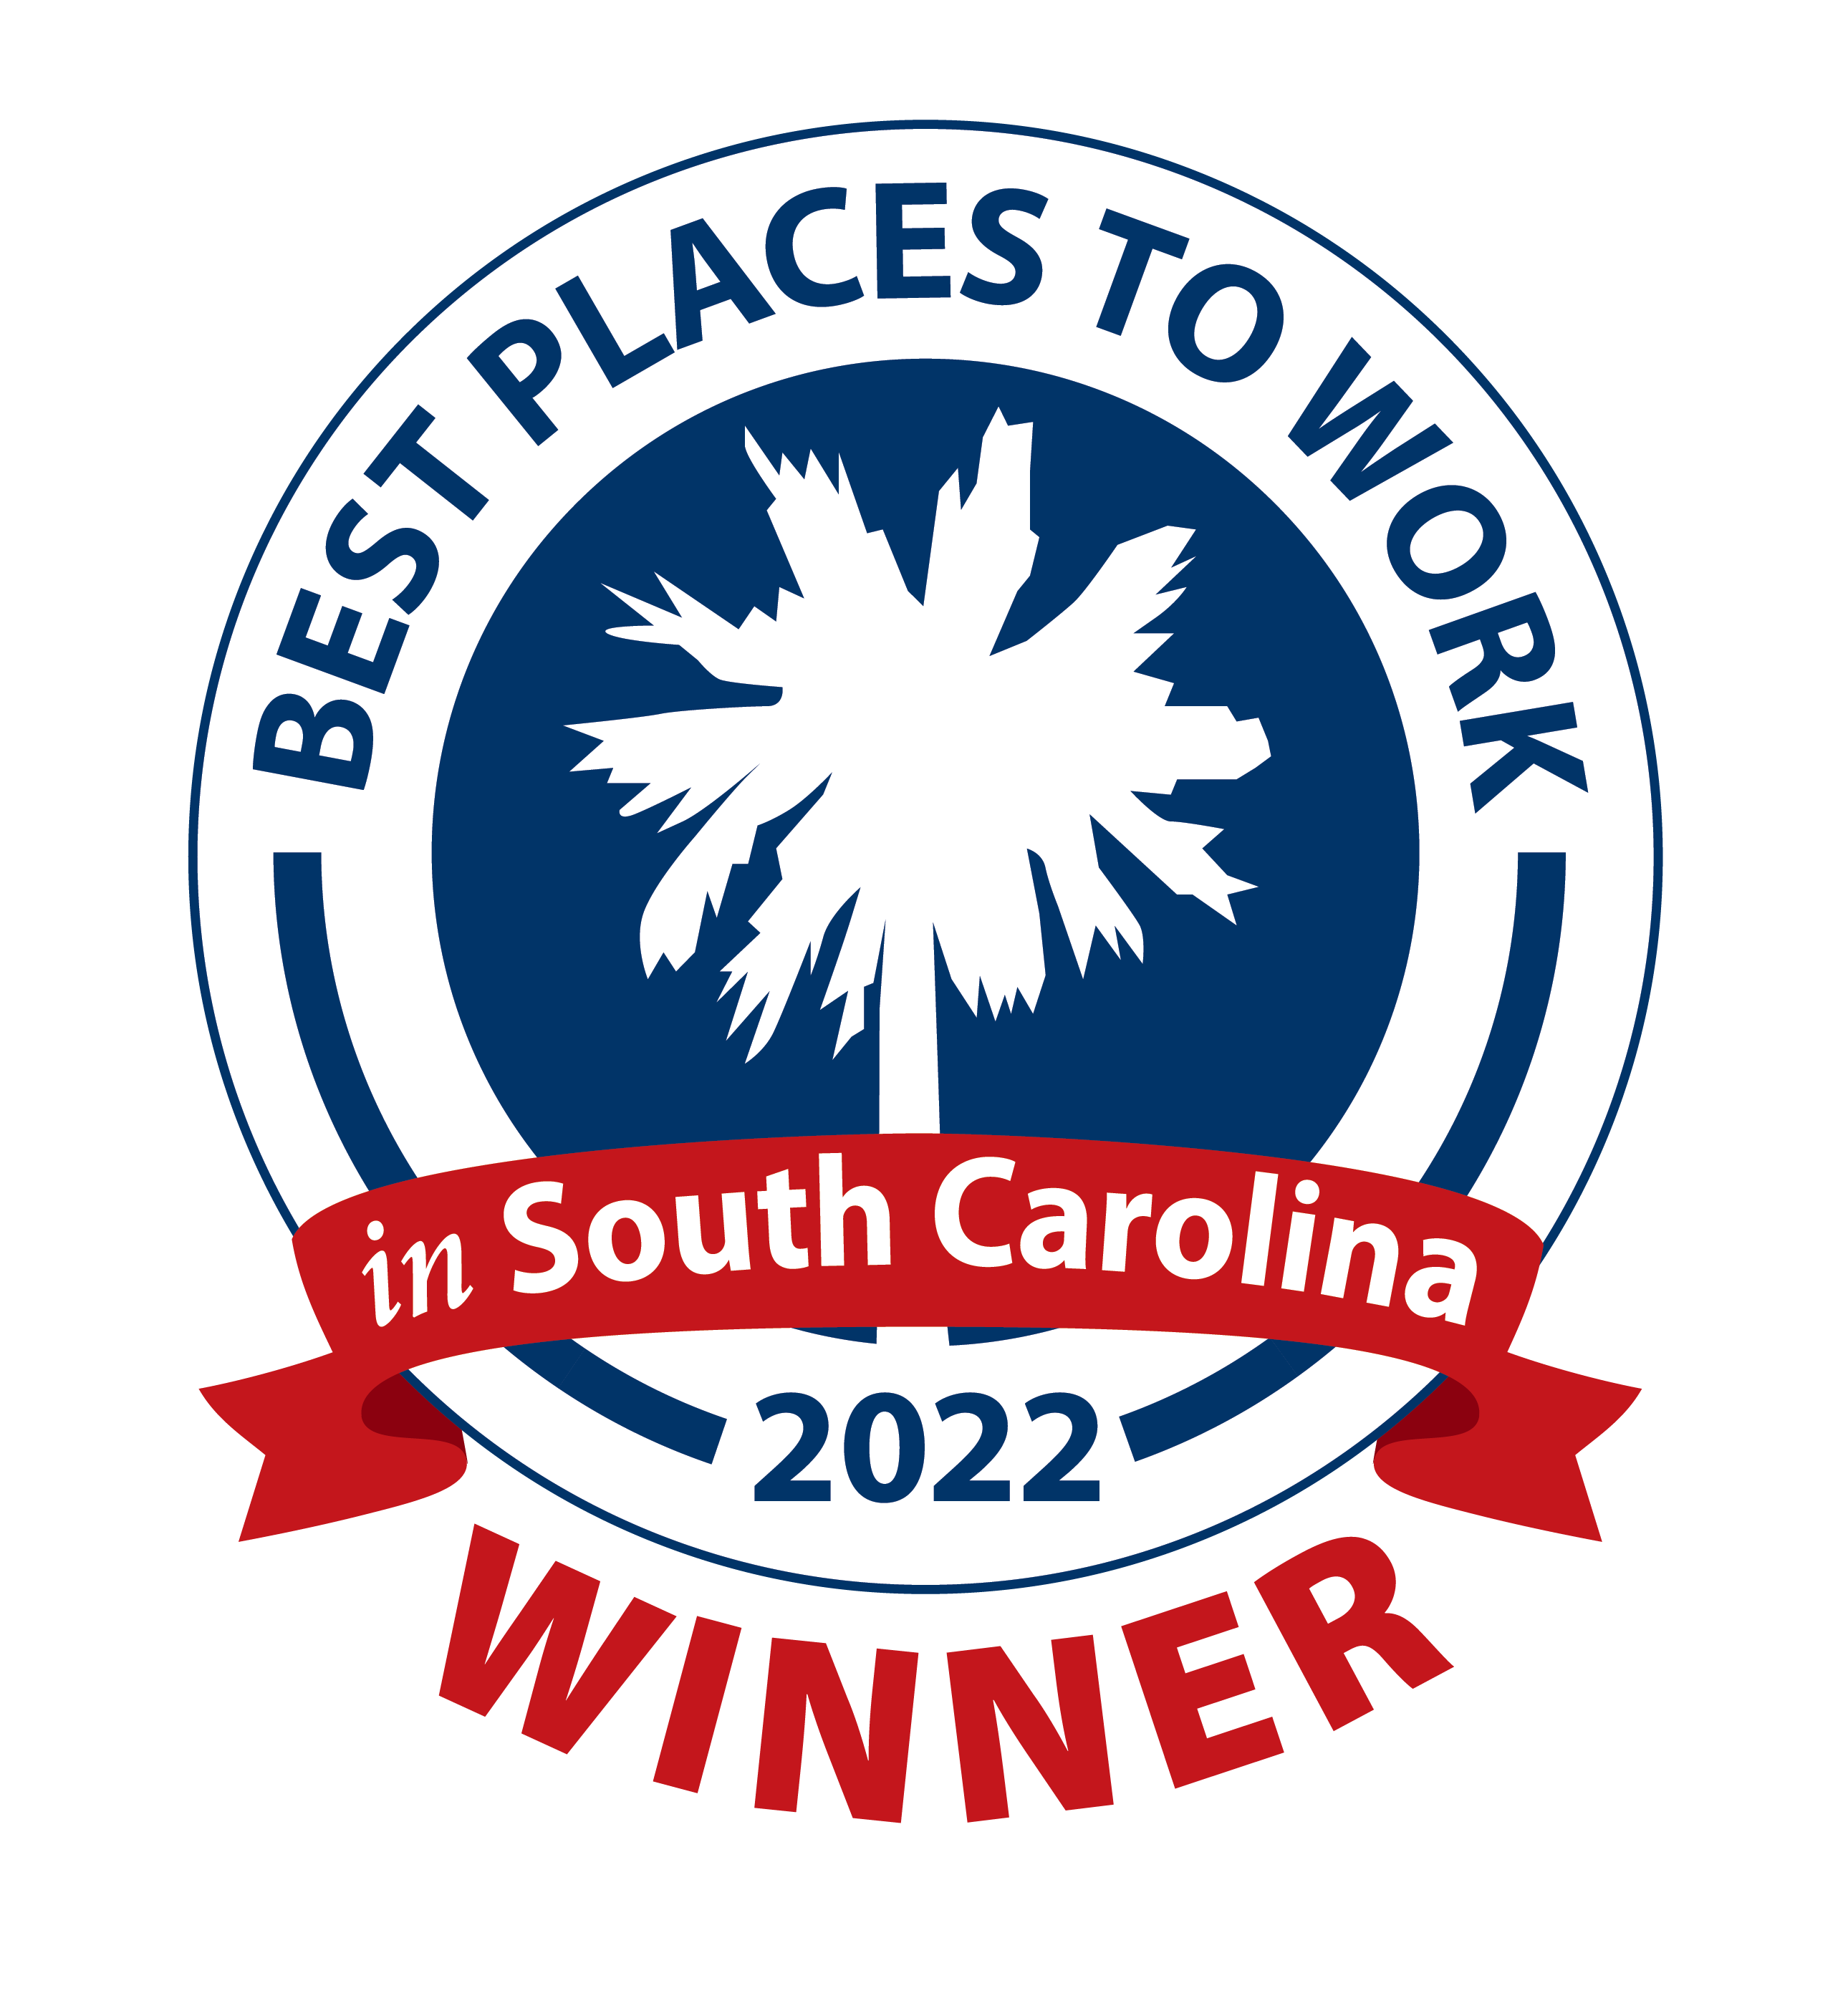 Best Places to Work Winner logo